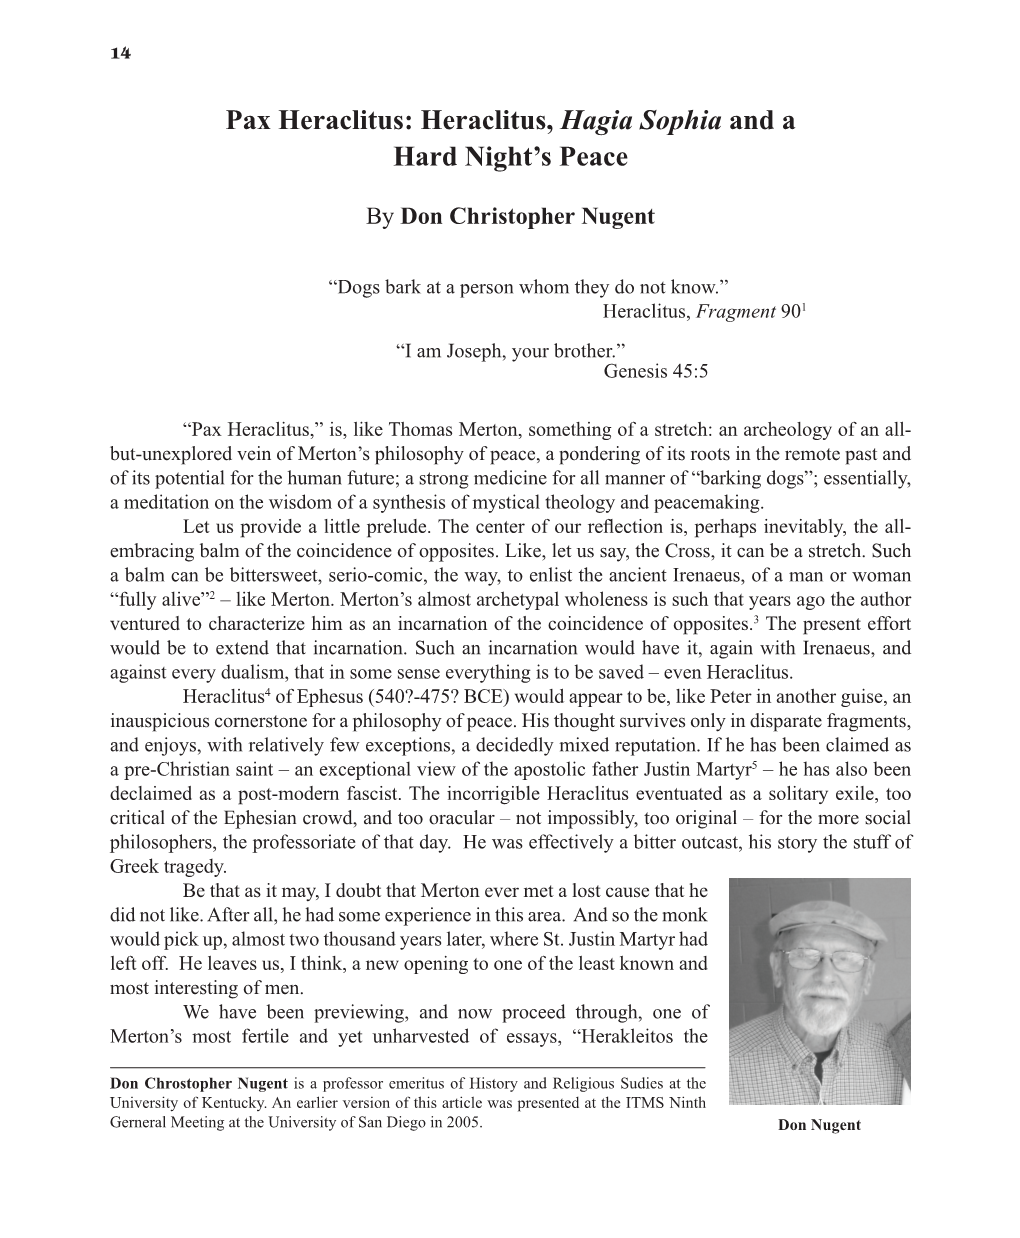 Pax Heraclitus: Heraclitus, Hagia Sophia and a Hard Night’S Peace